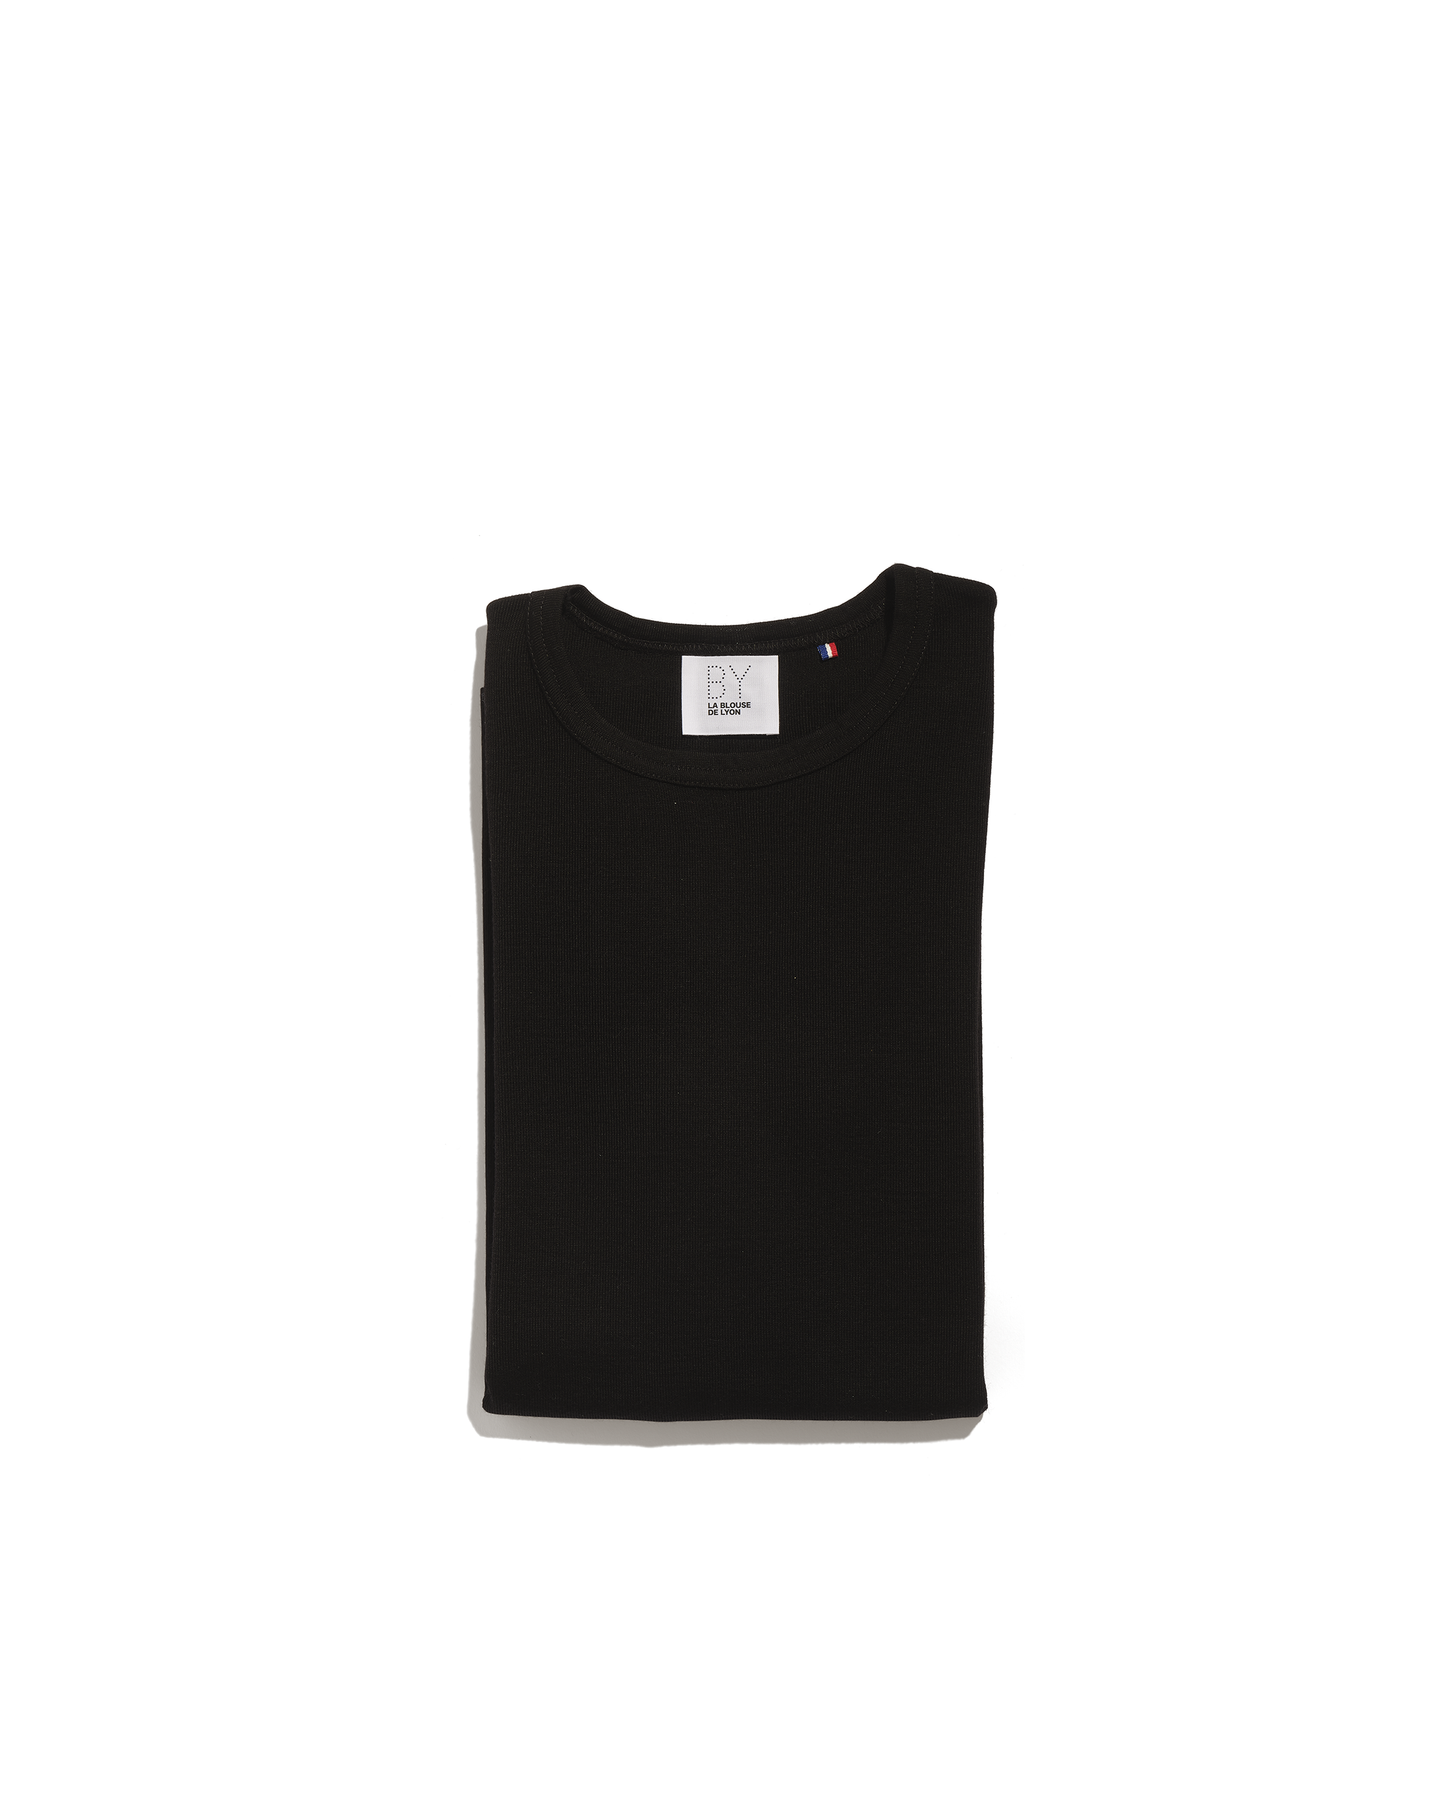 Black 100% merino long-sleeved sweater